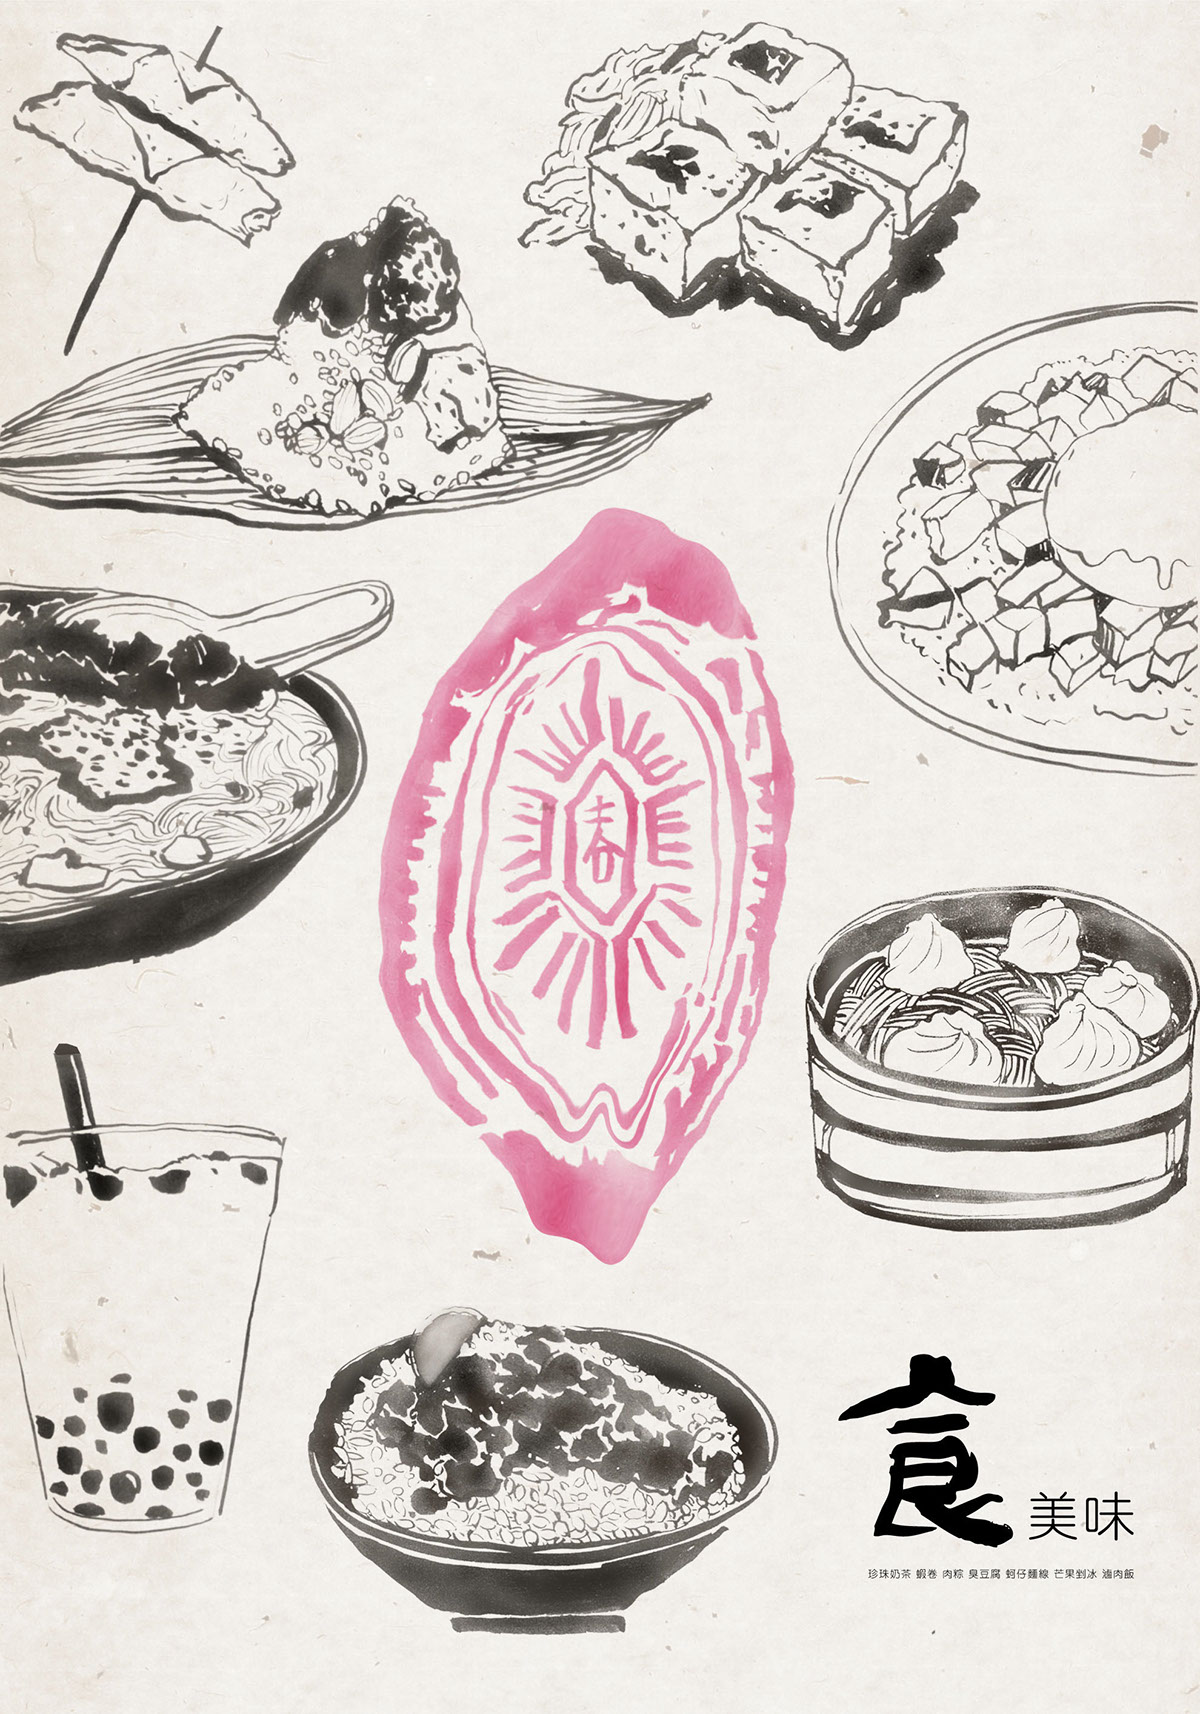 taiwan culture illustration of food